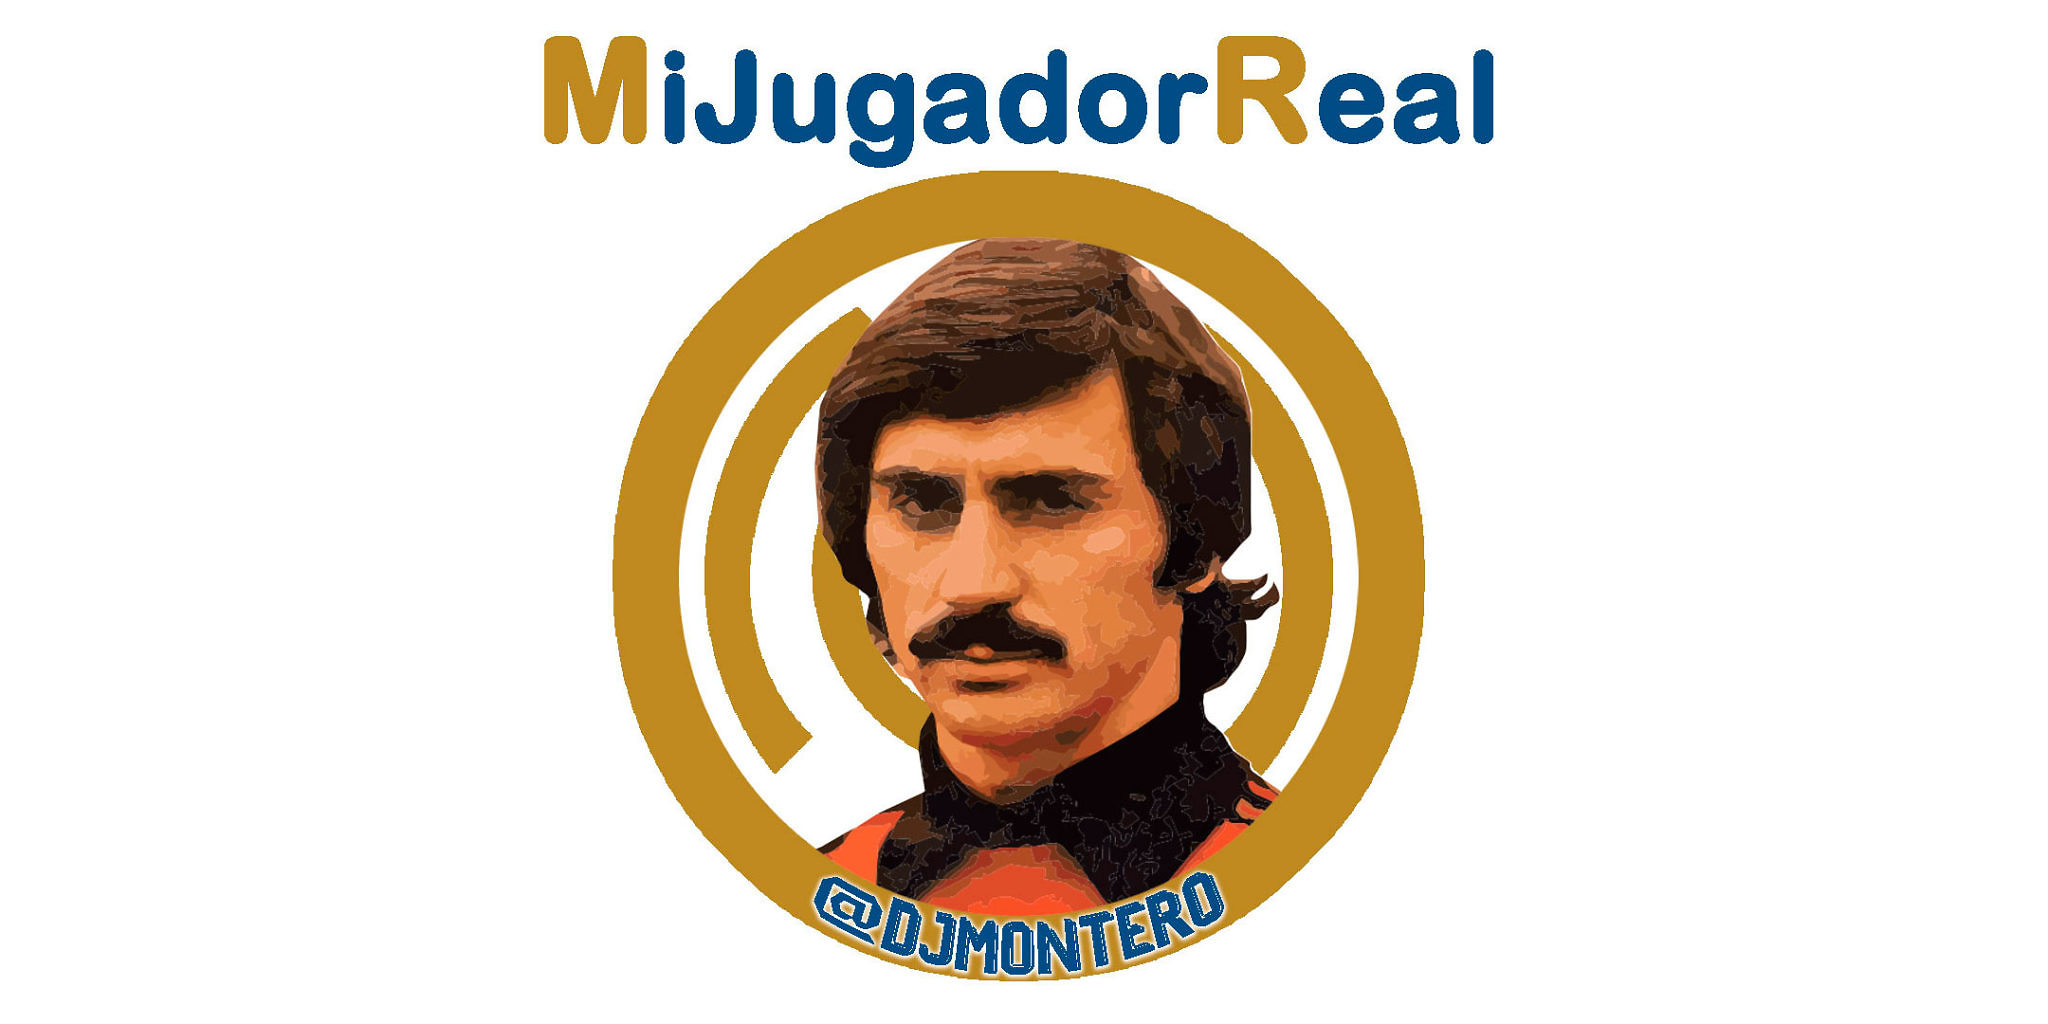 #MiJugadorReal | @Djmontero